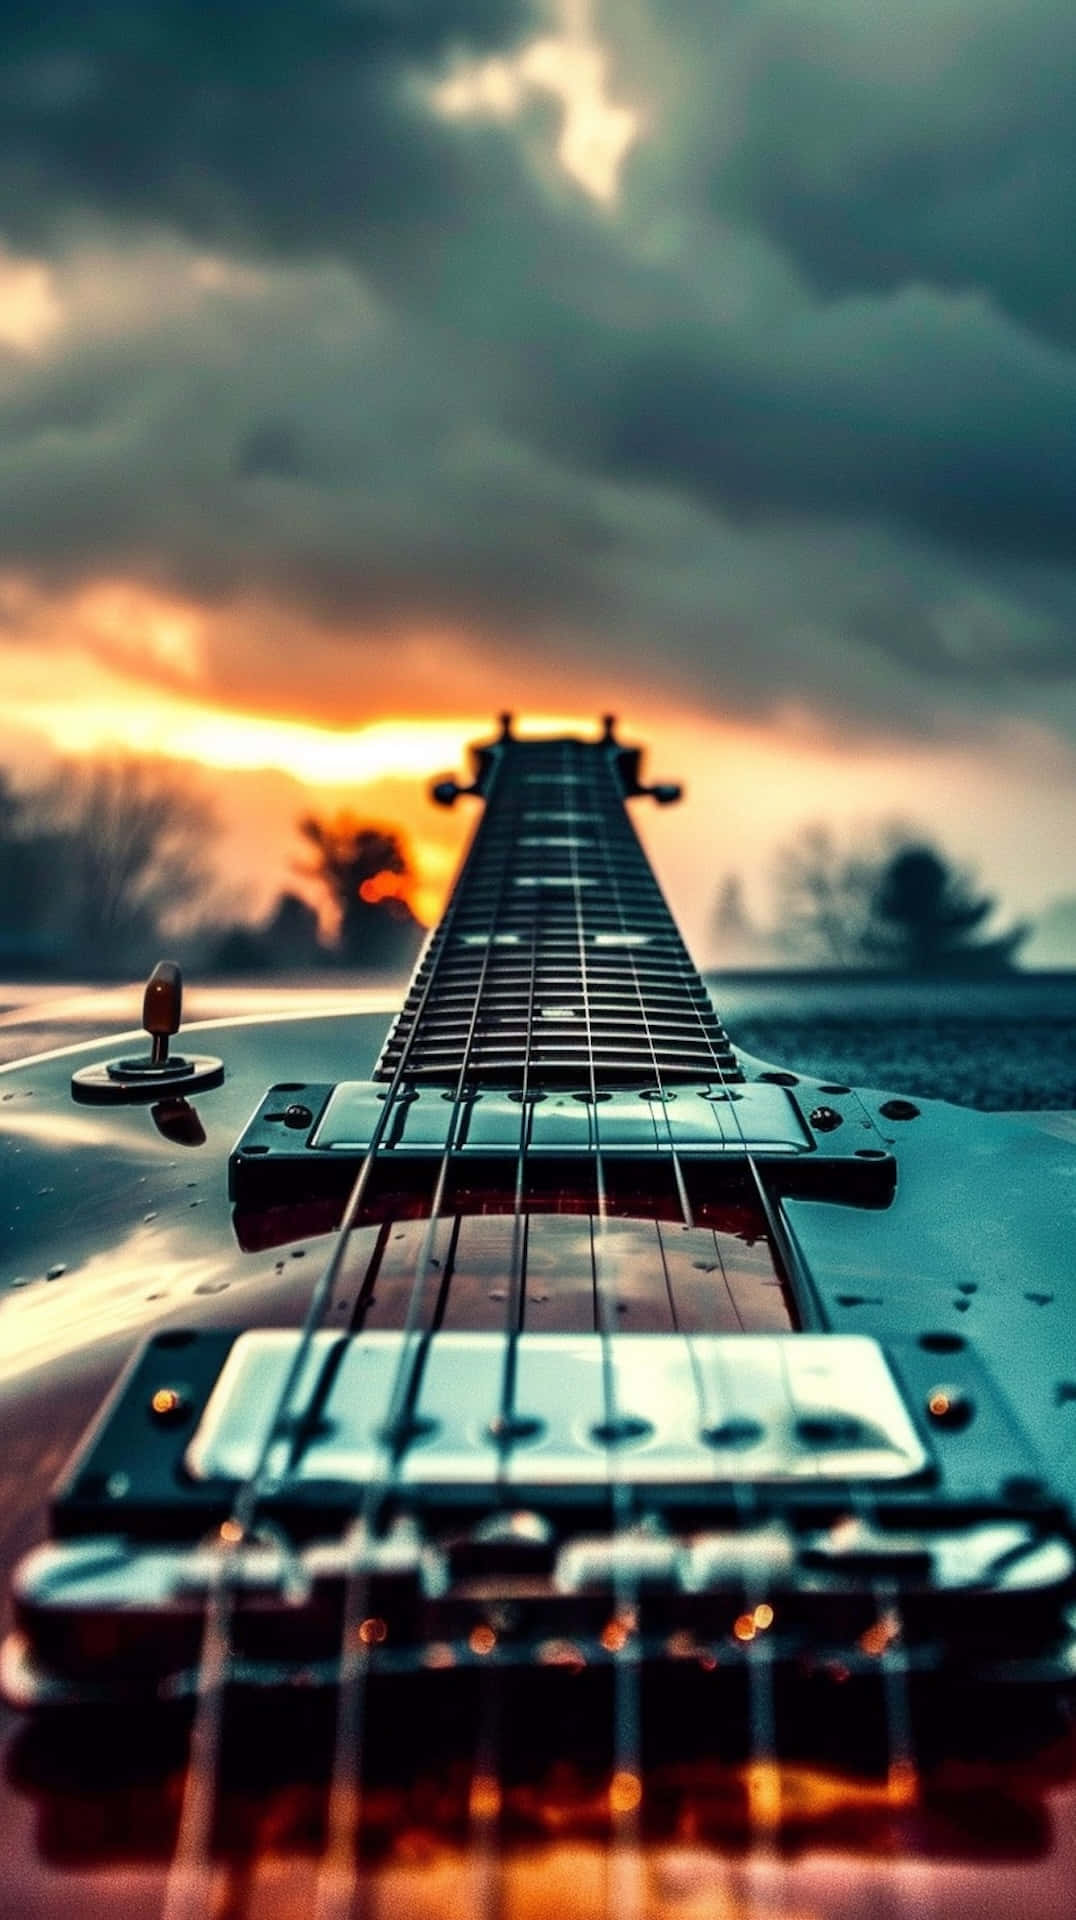 Sunset Guitar Frets H D Background